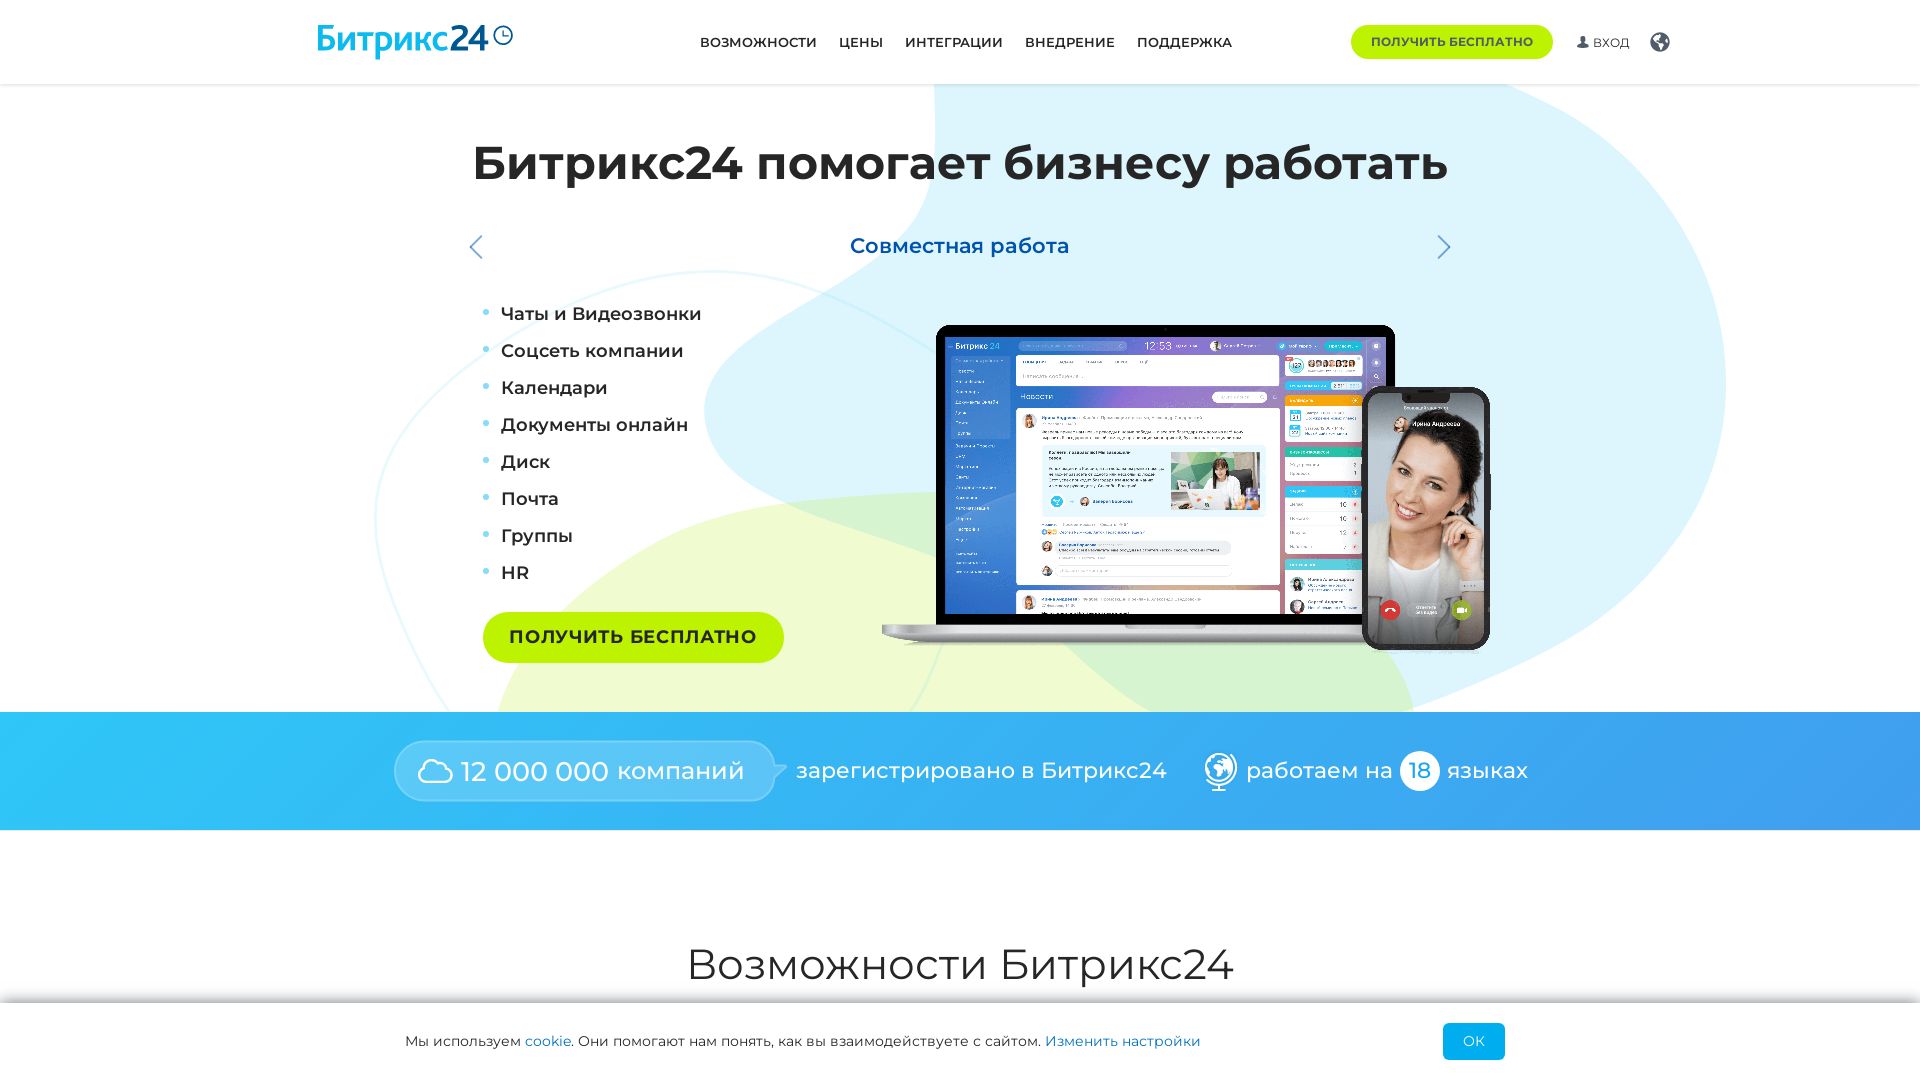 Status do site bitrix24.ru está   ONLINE